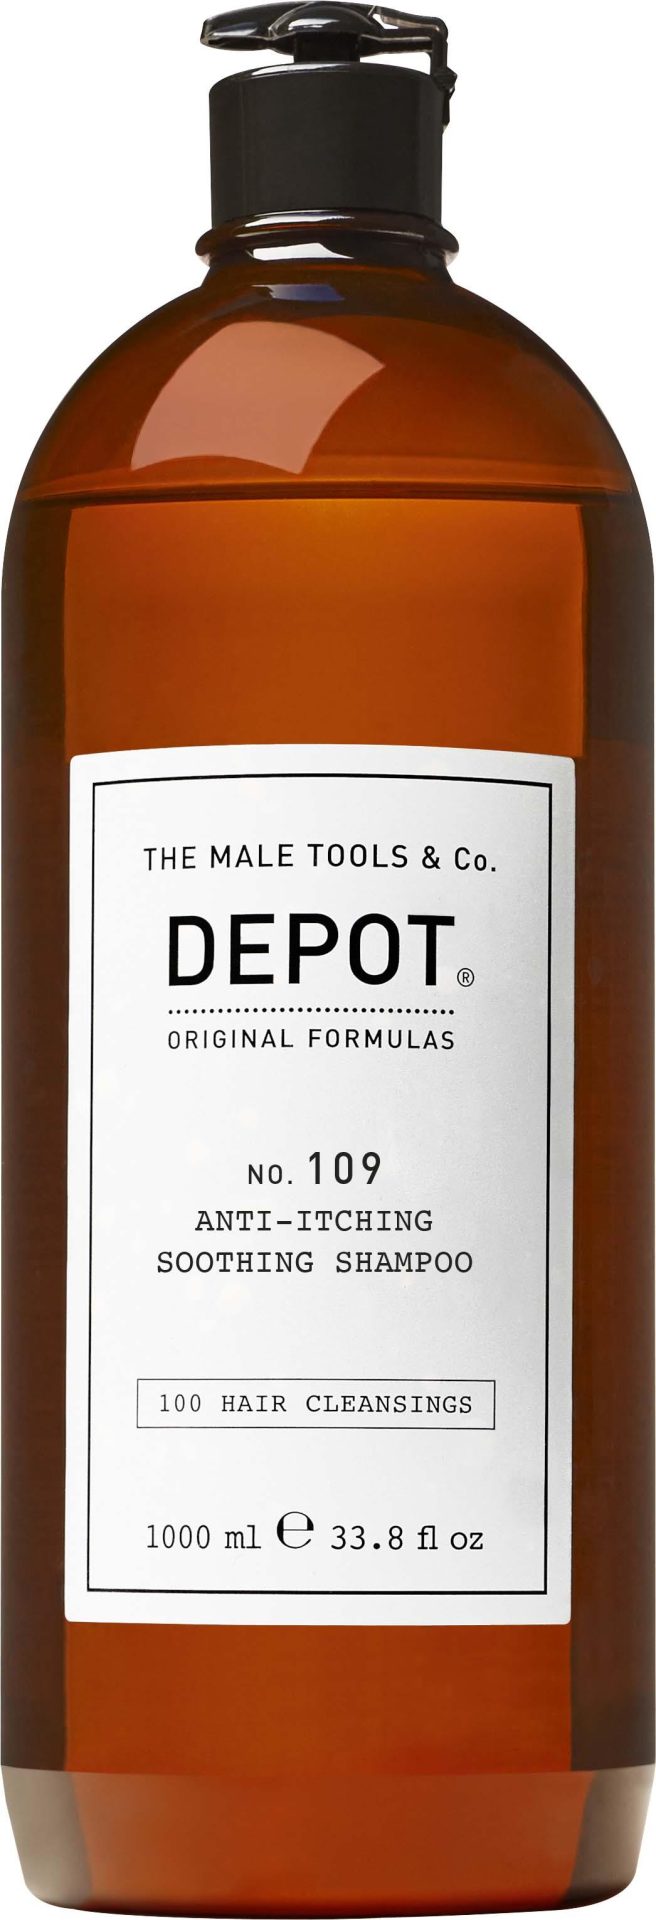 depot litre anti itching